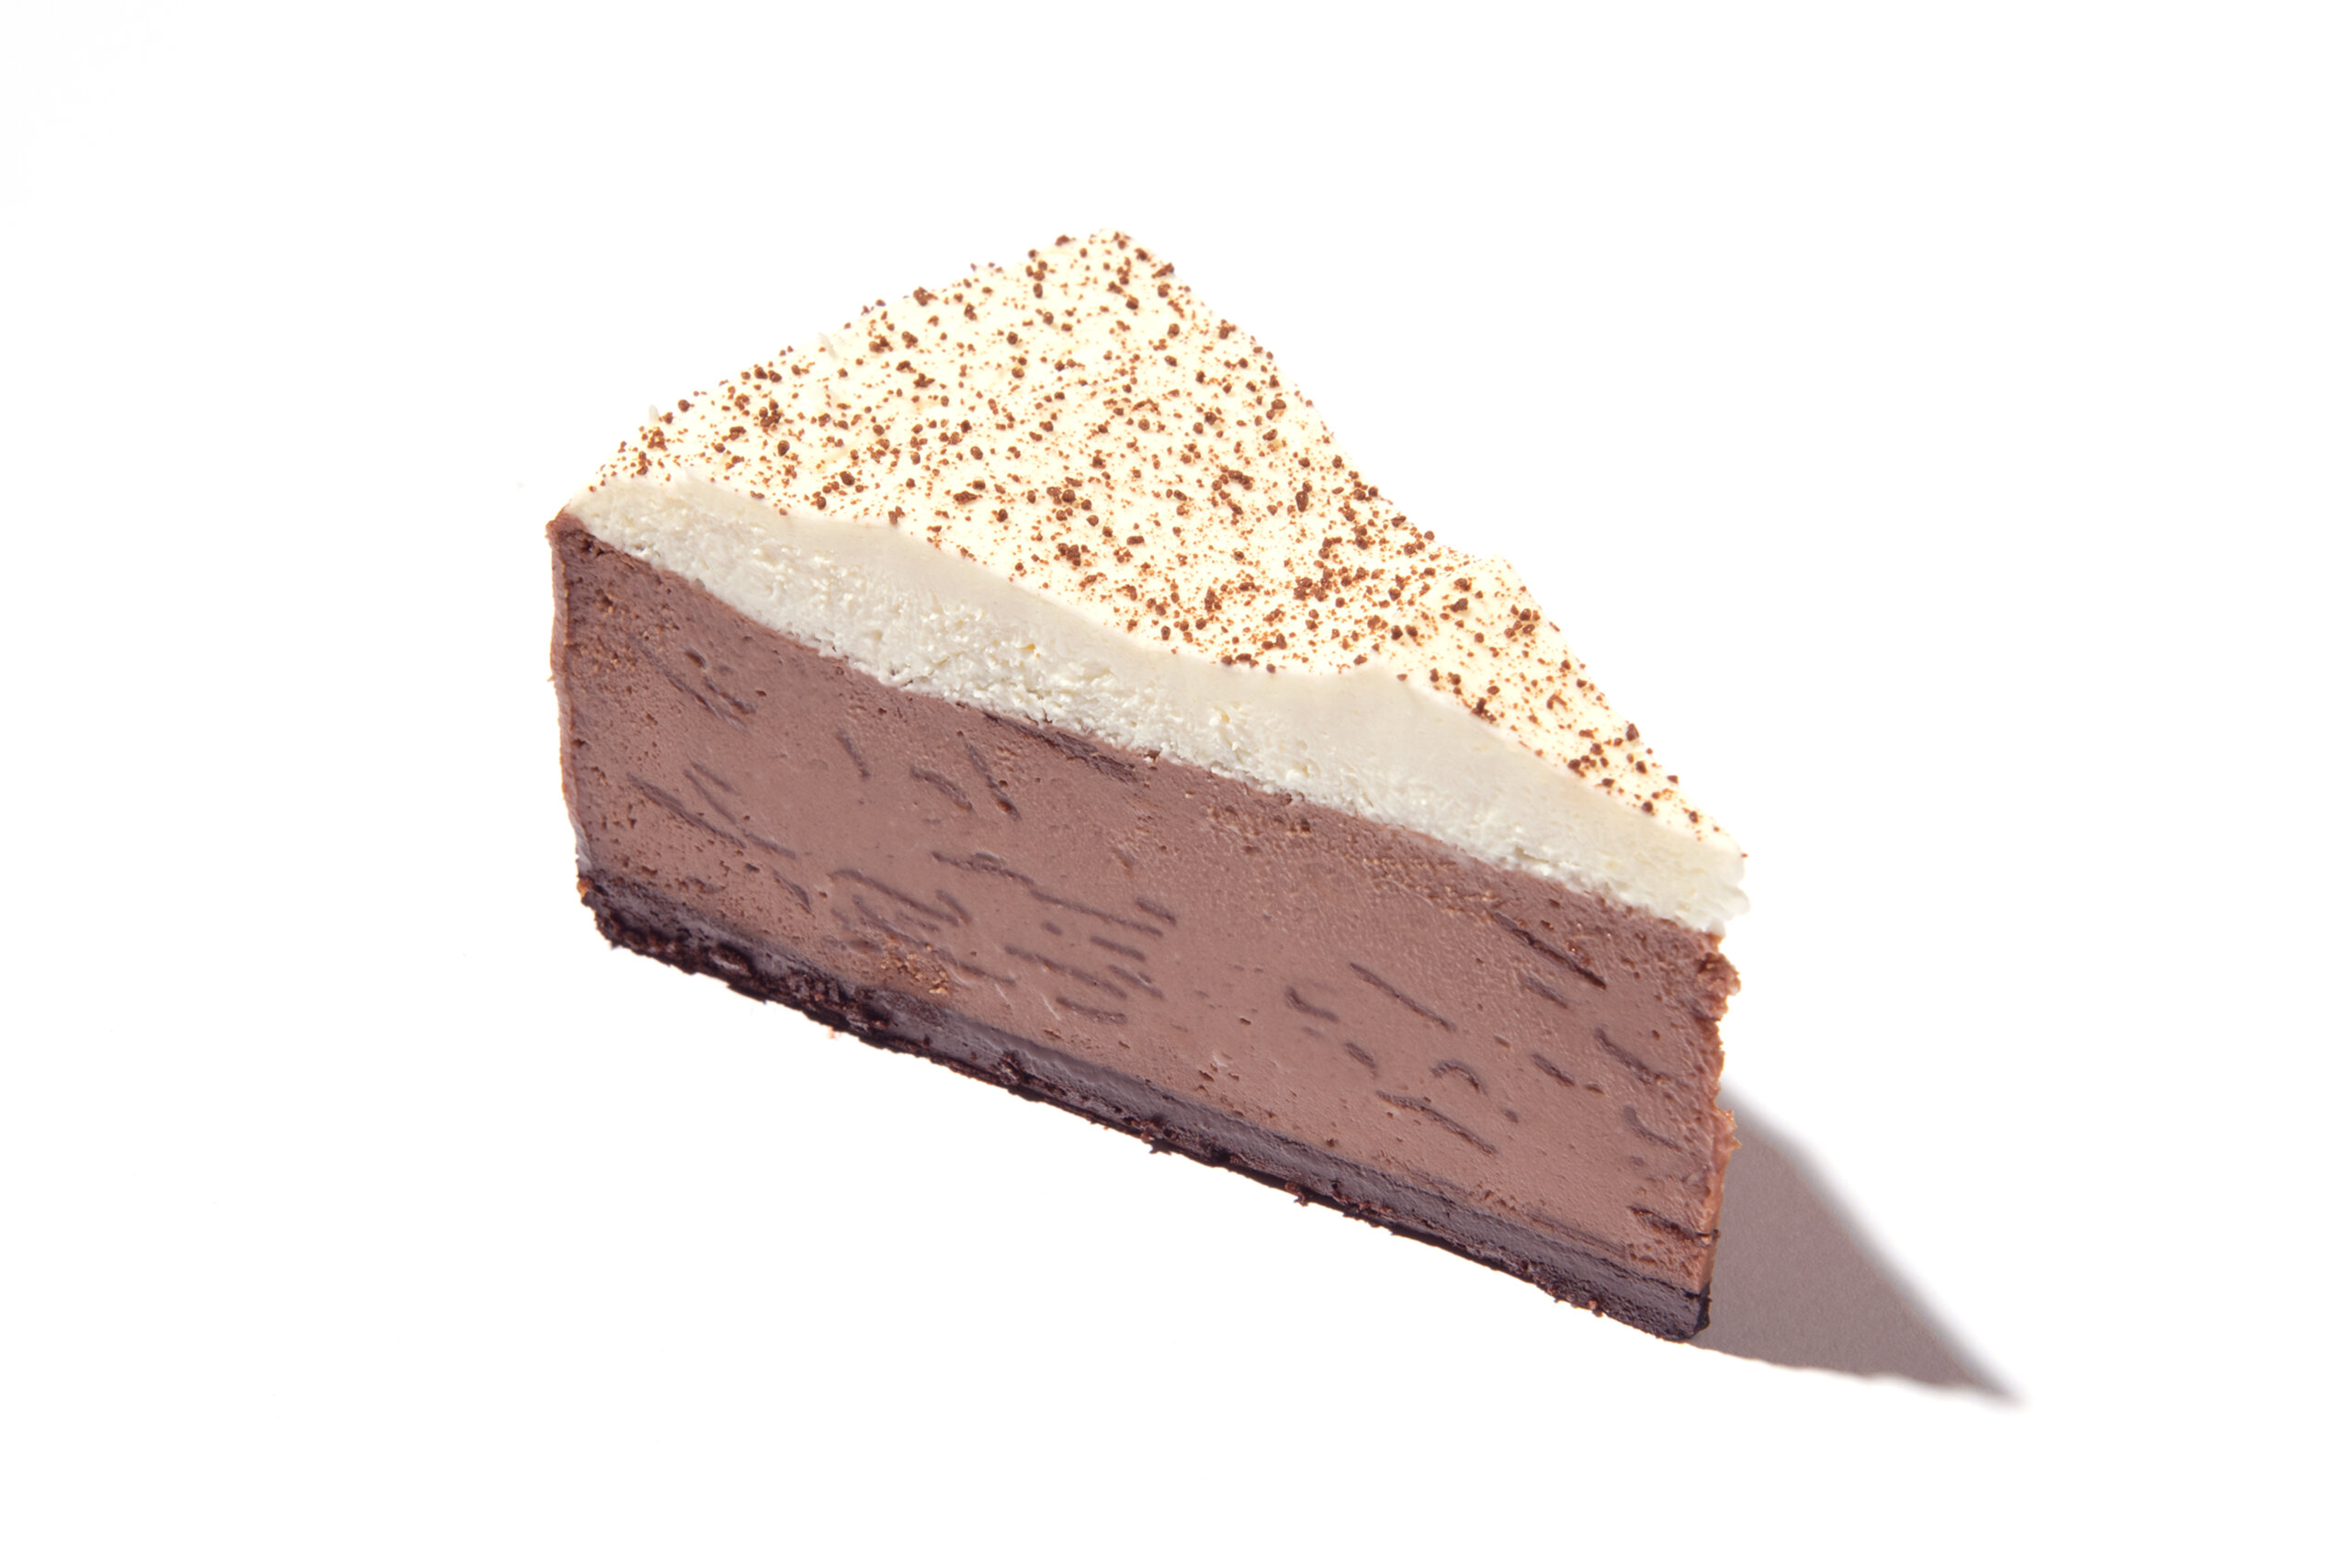 A slice of Eli's Hot Chocolate Cheesecake